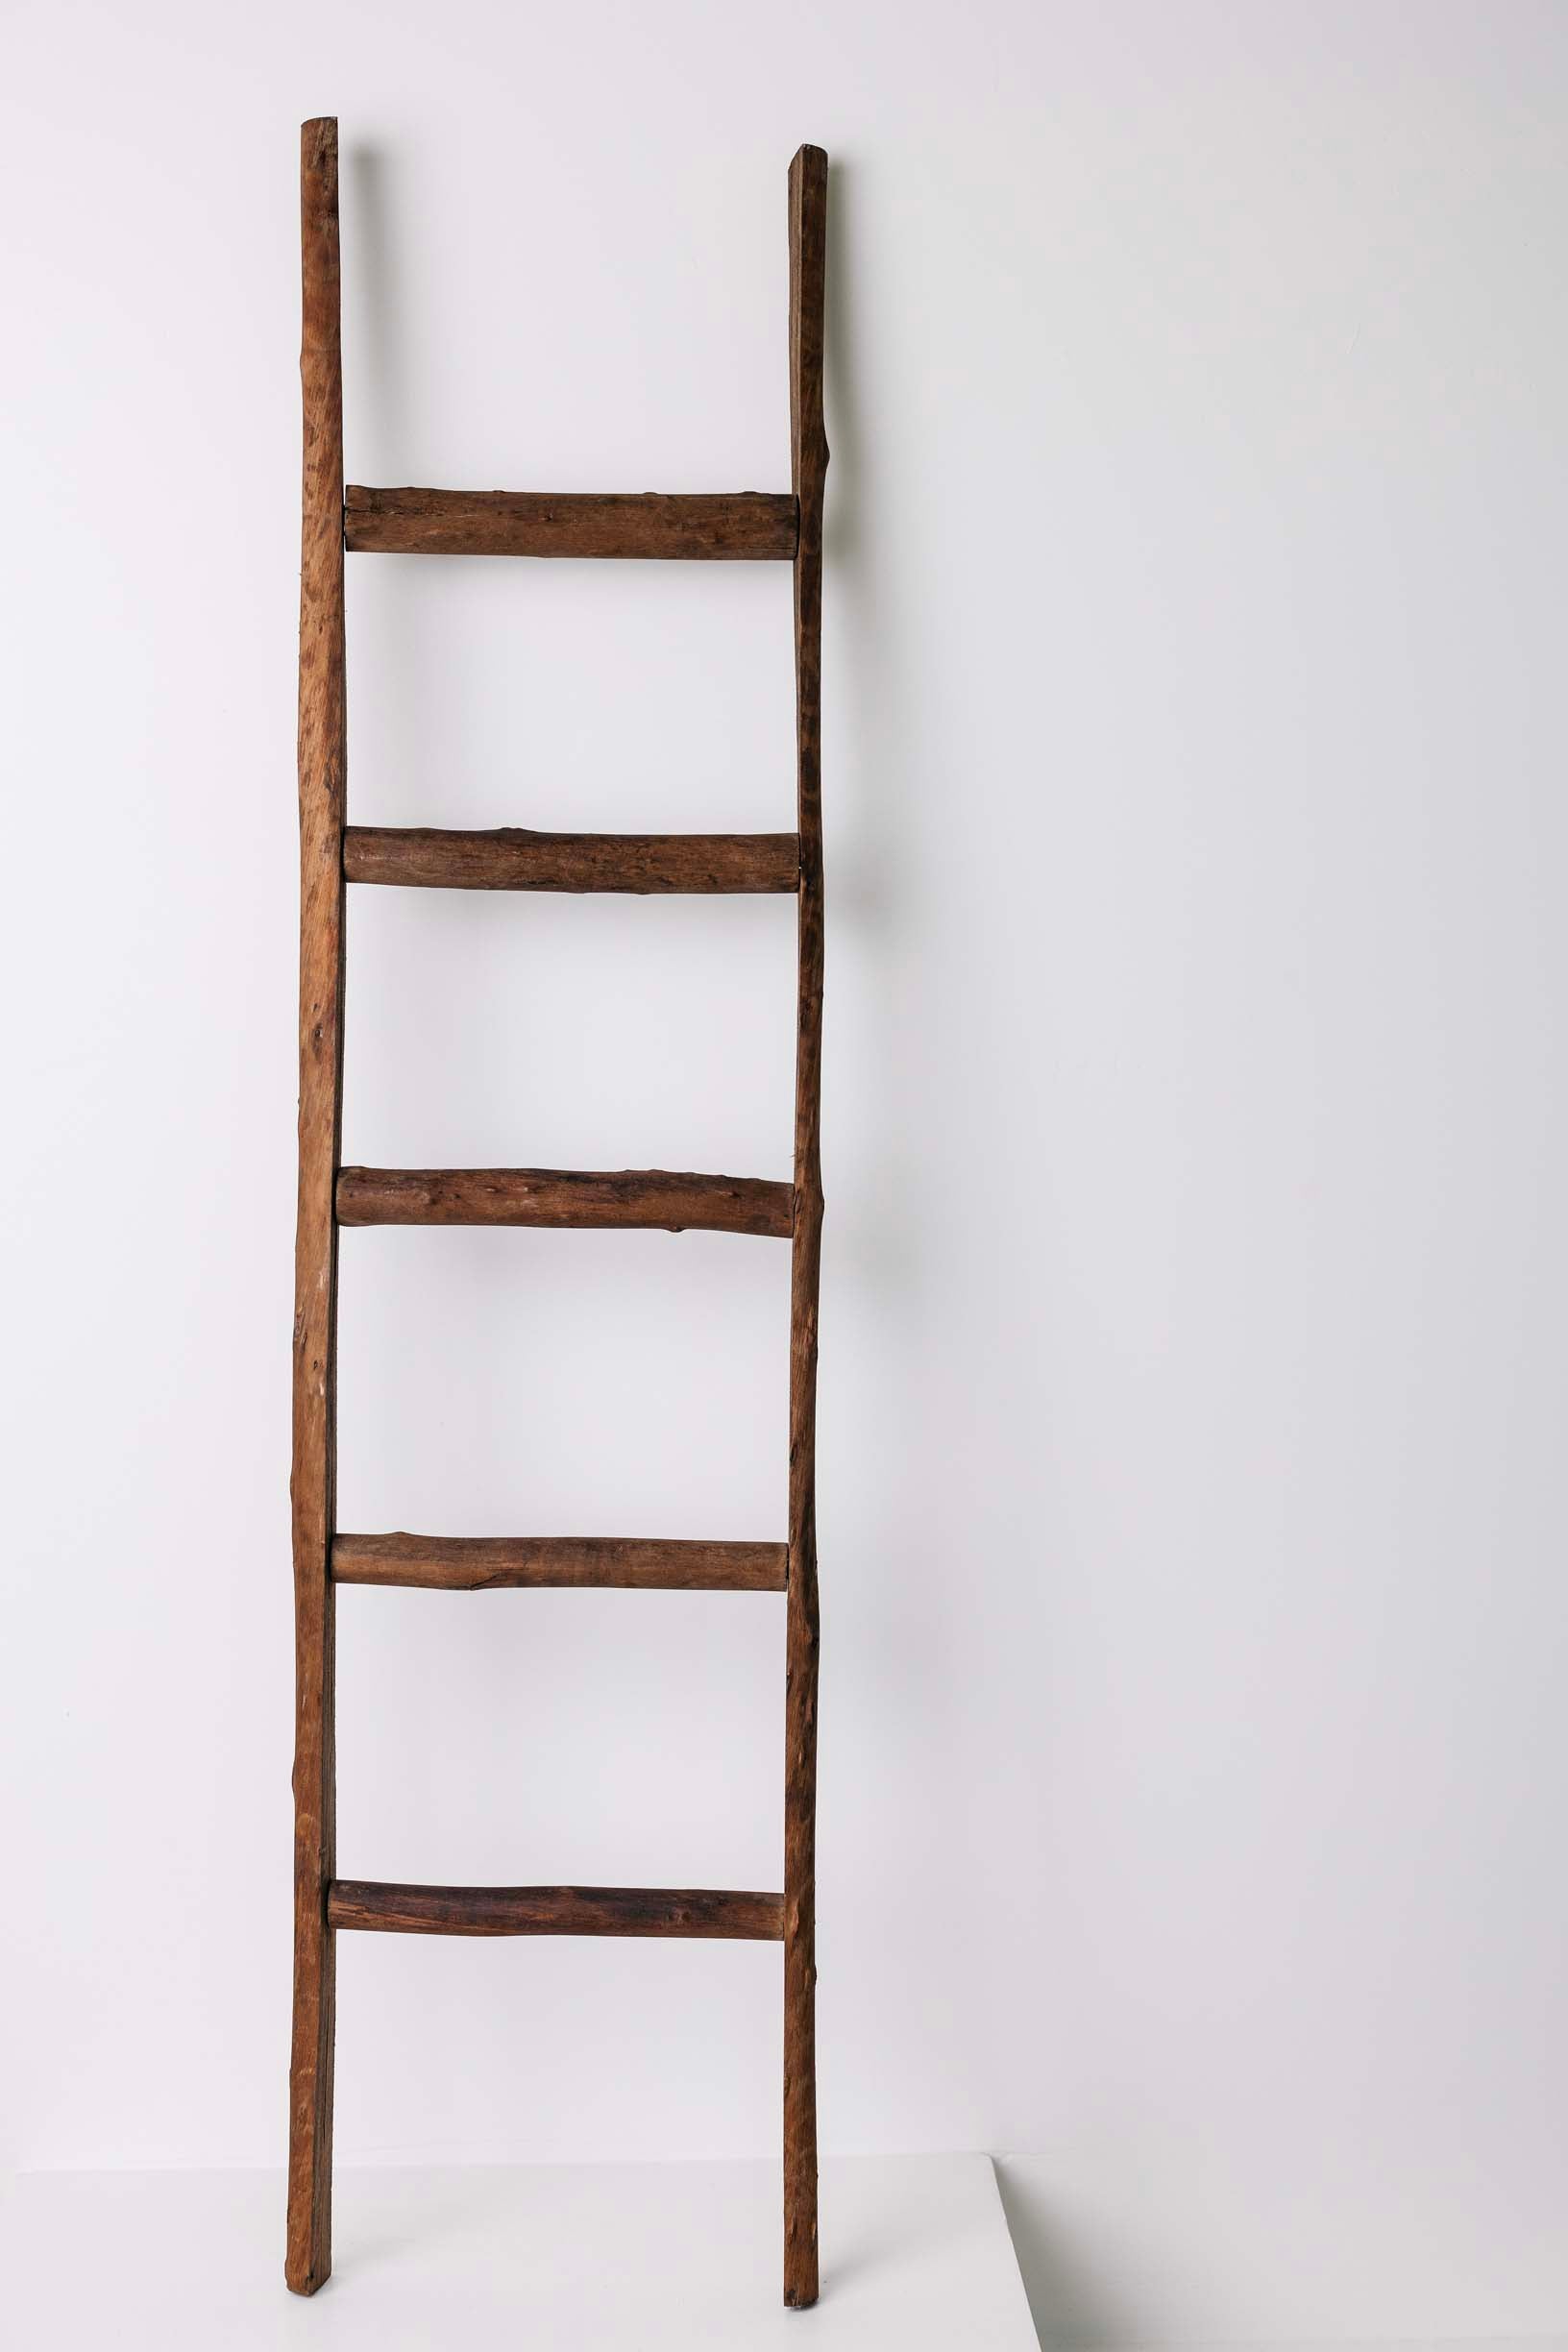 Kindling Wood Decorative Ladder - WAREHOUSE PICKUP ONLY